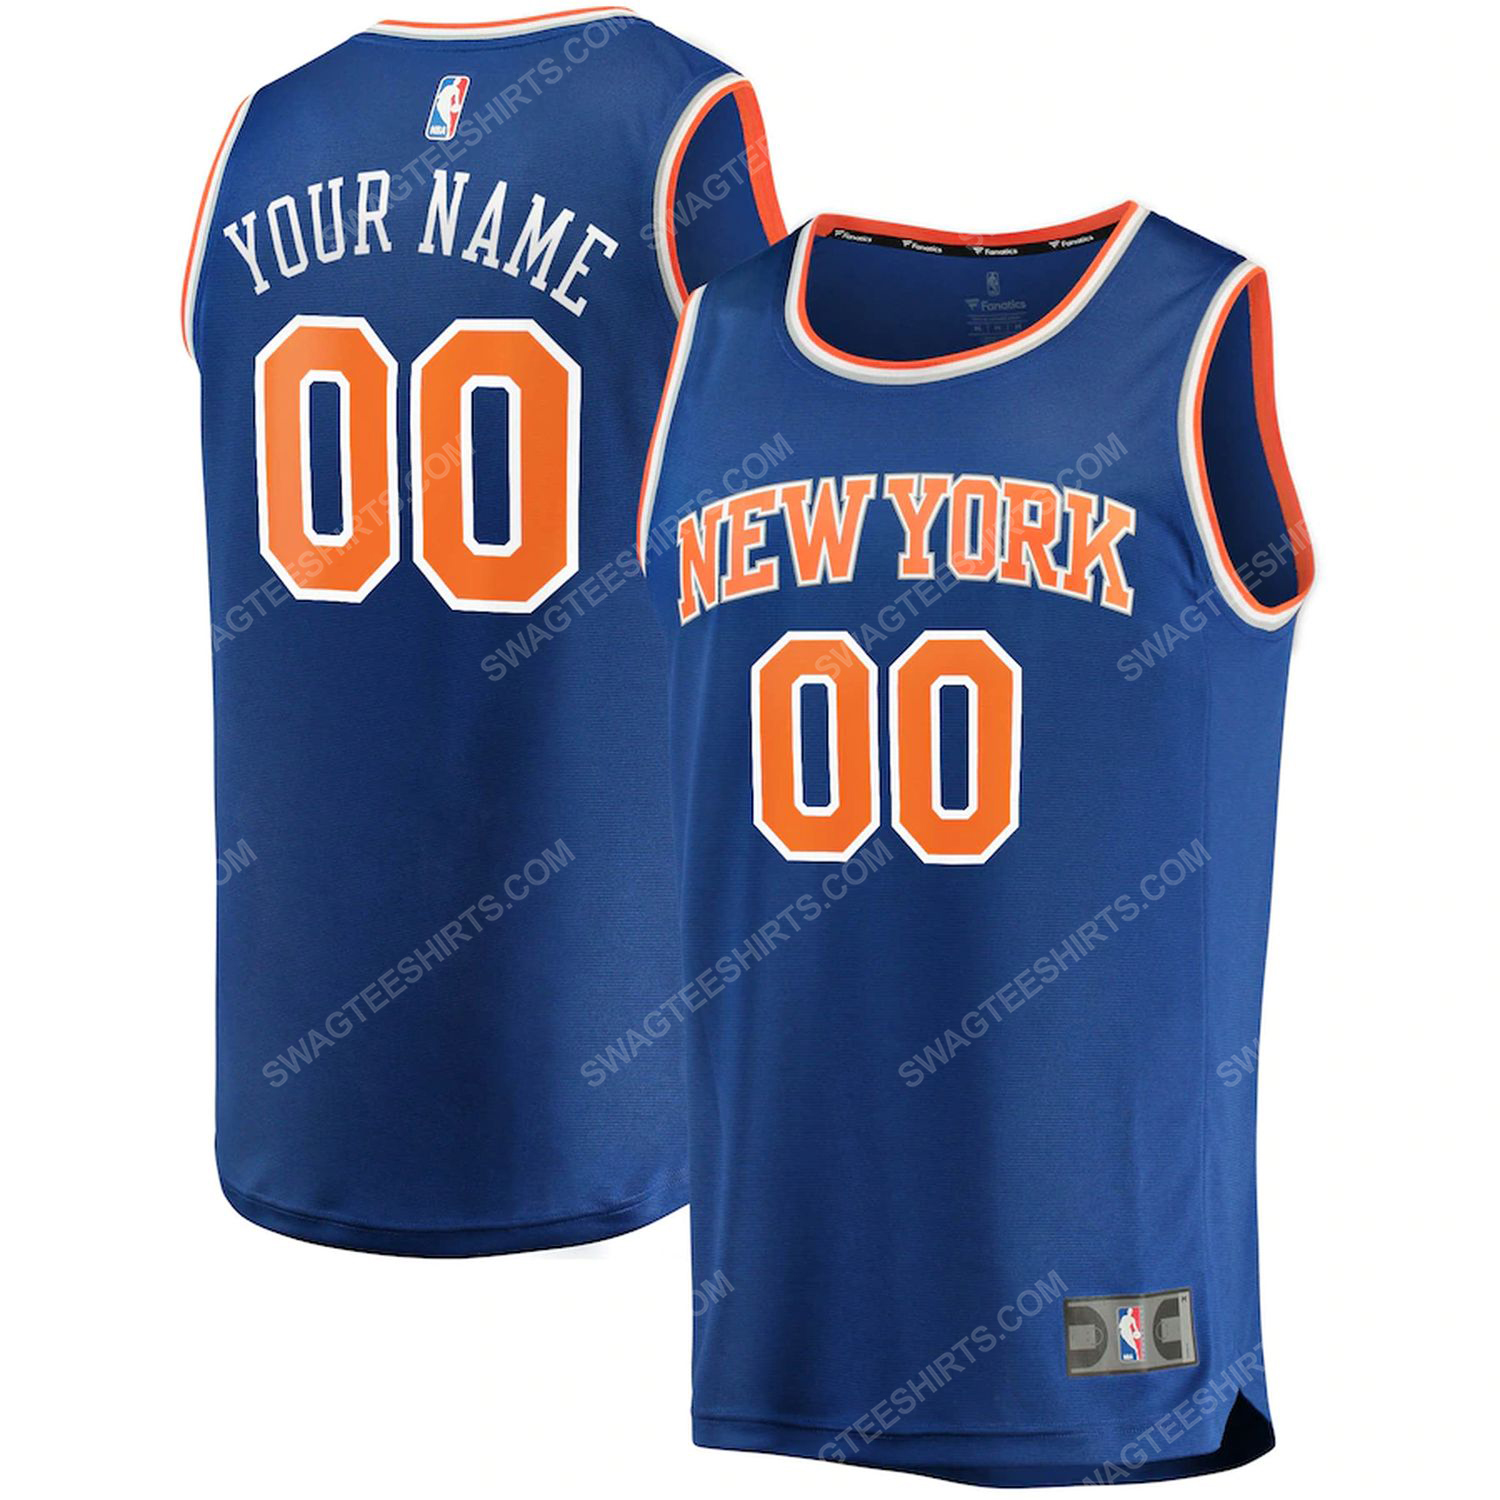 Custom nba new york knicks team basketball jersey - blue